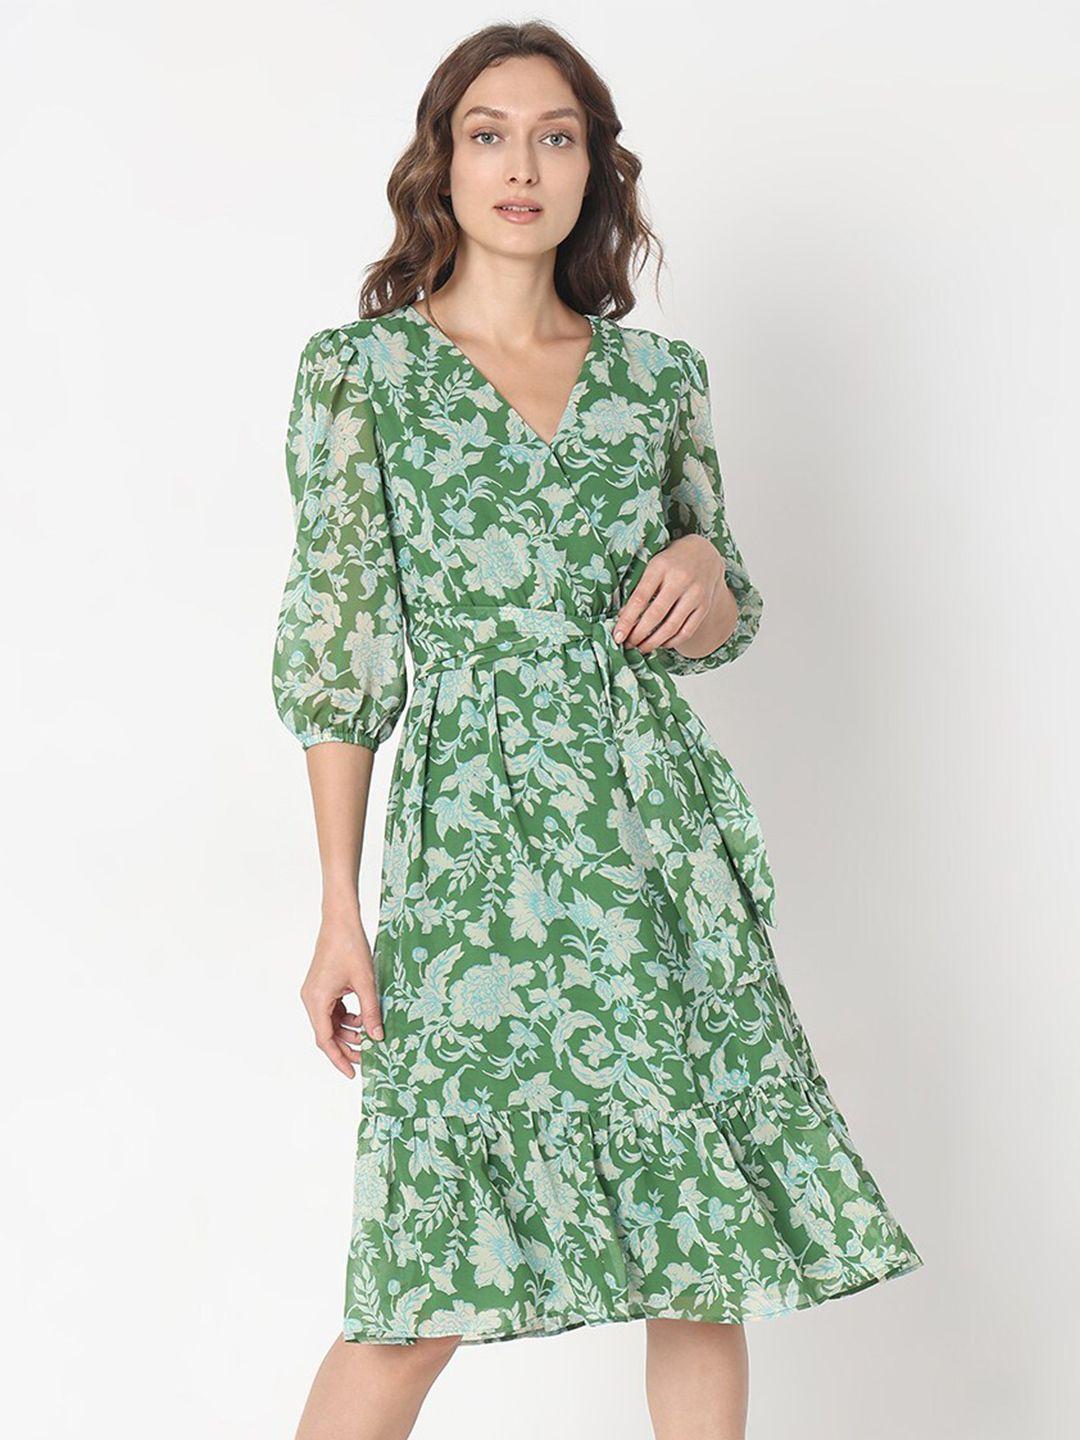 vero moda green floral print bishop sleeve ruffled a-line dress